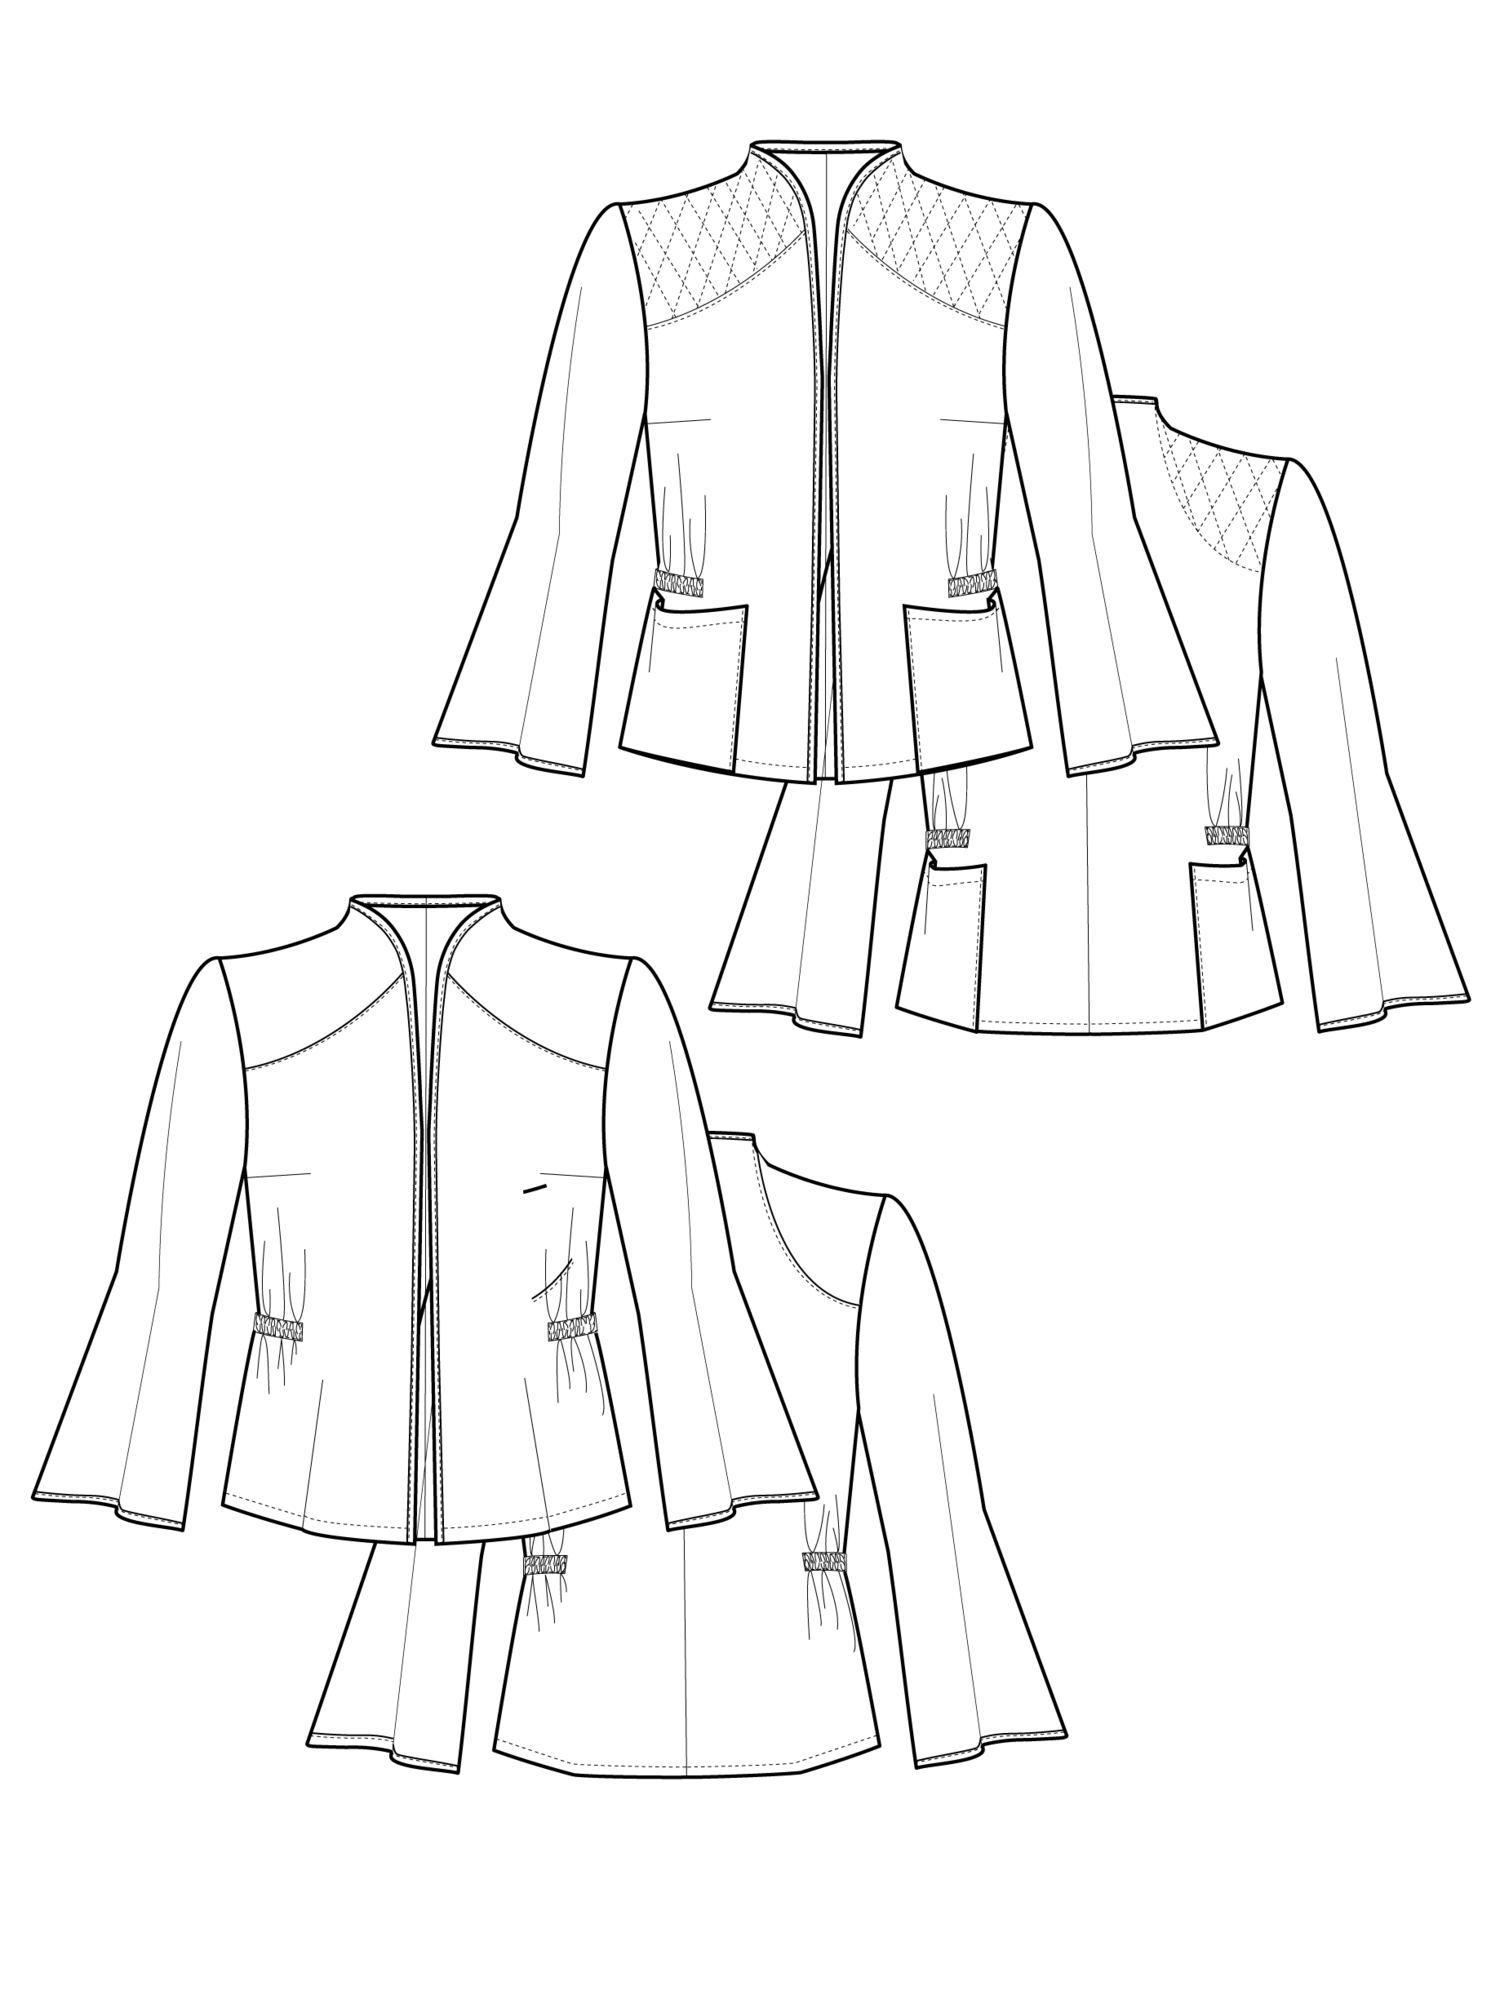 How to Do Fashion No. 18 Los Angeles Jacket - The Fold Line